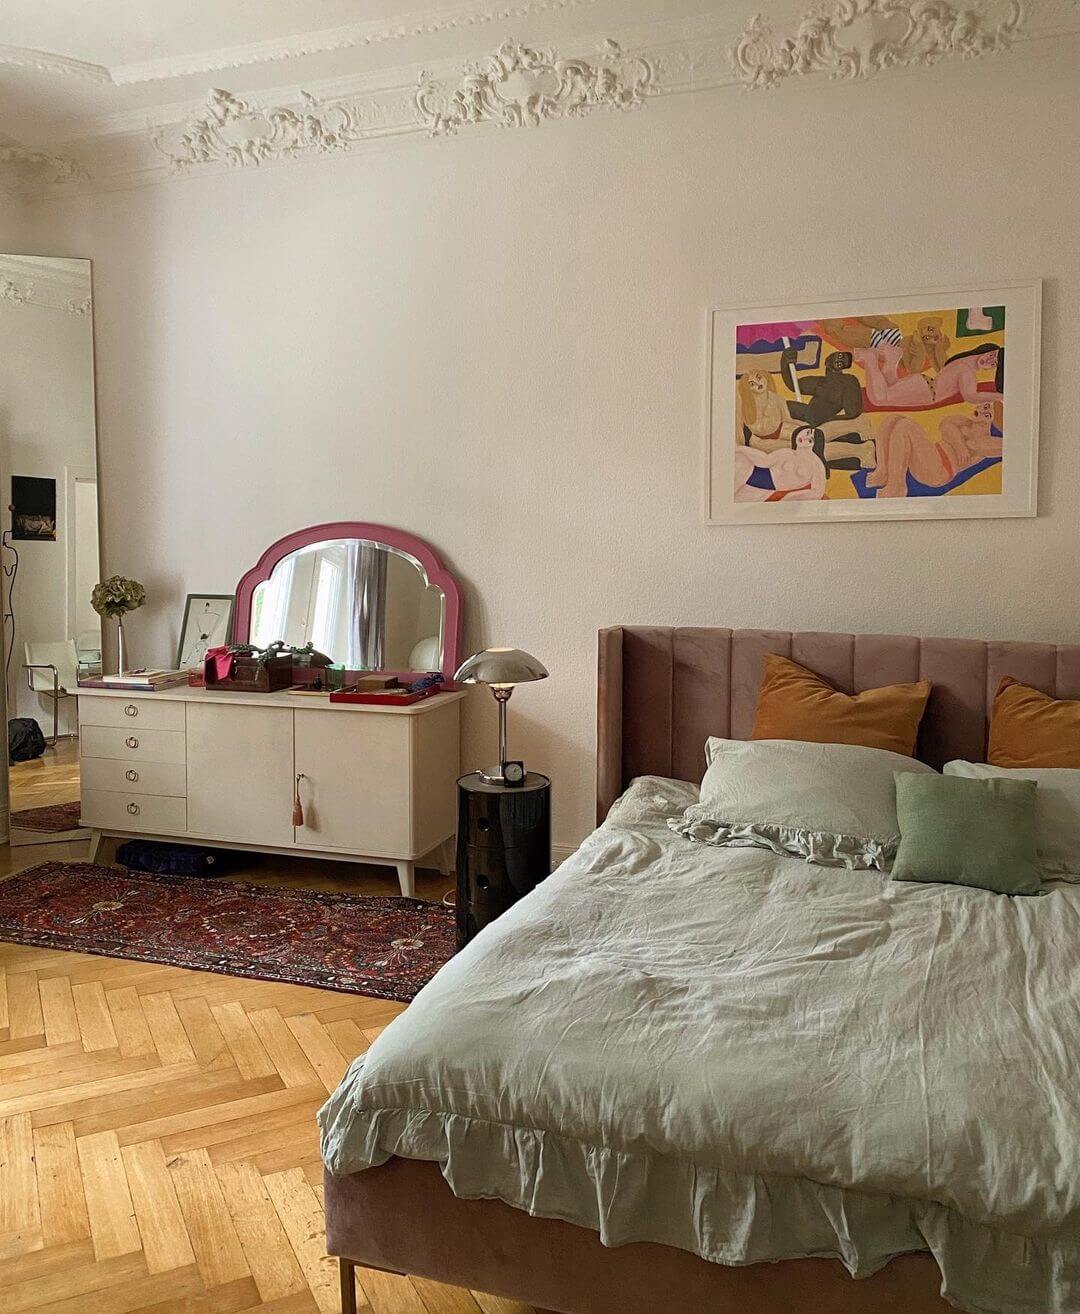 neutral decor interior design bedroom with art prints